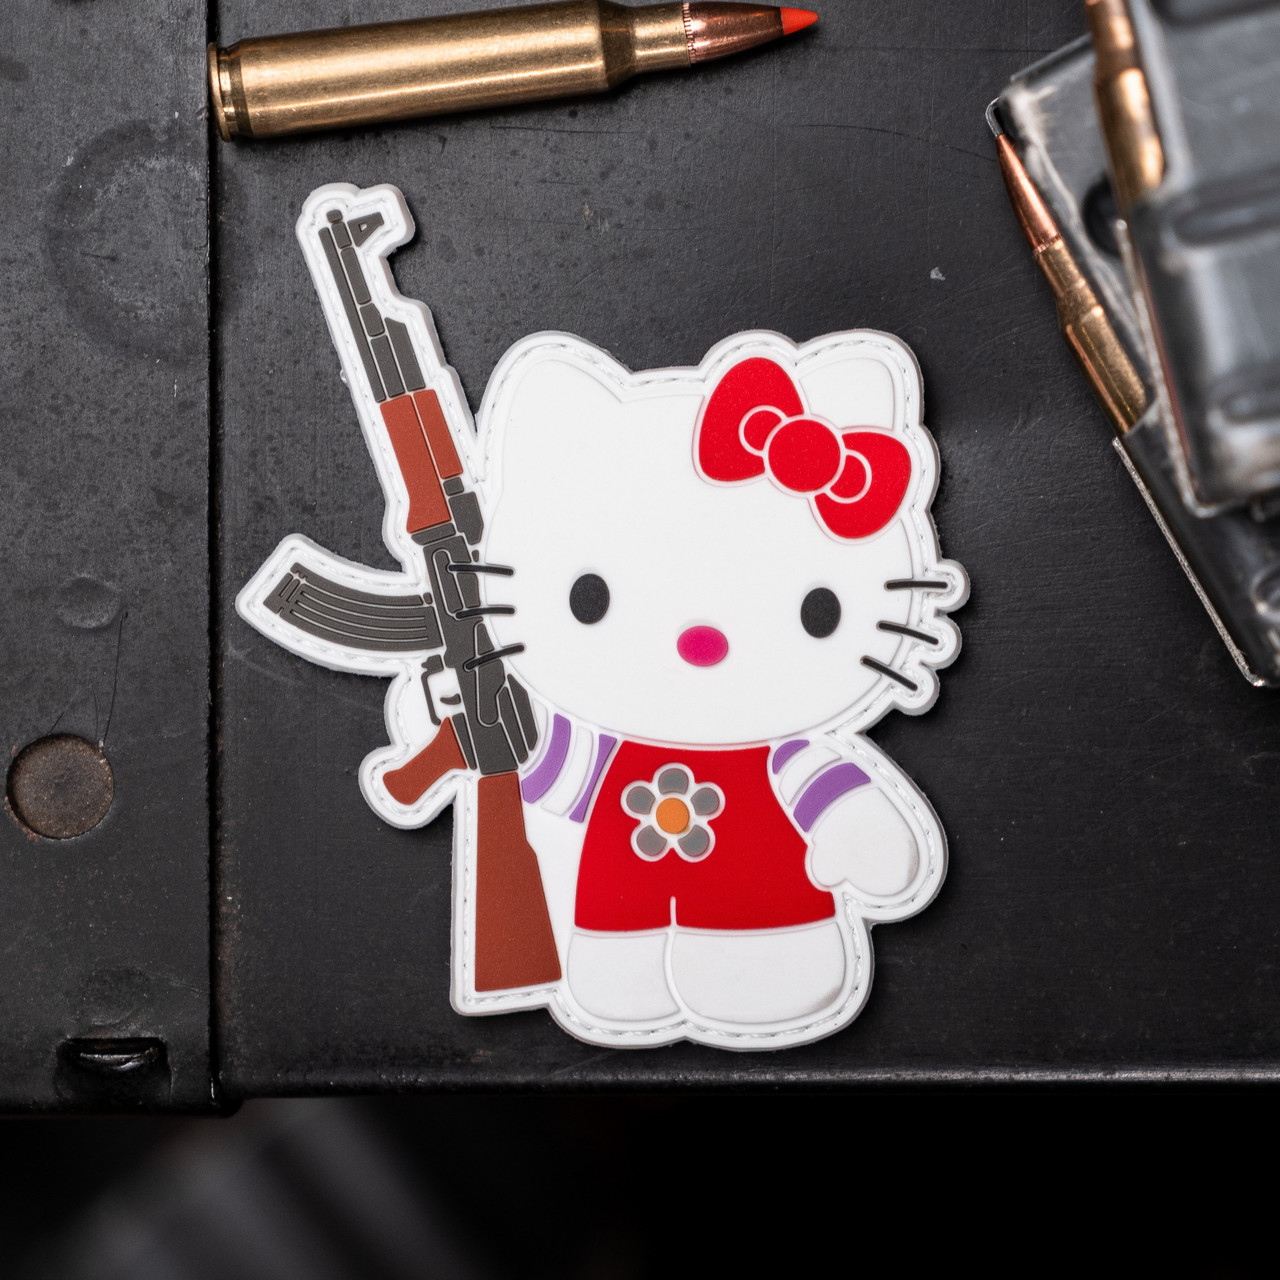 Awesome Morale Patches - Hello Kitty AK-47 PVC Morale Patch